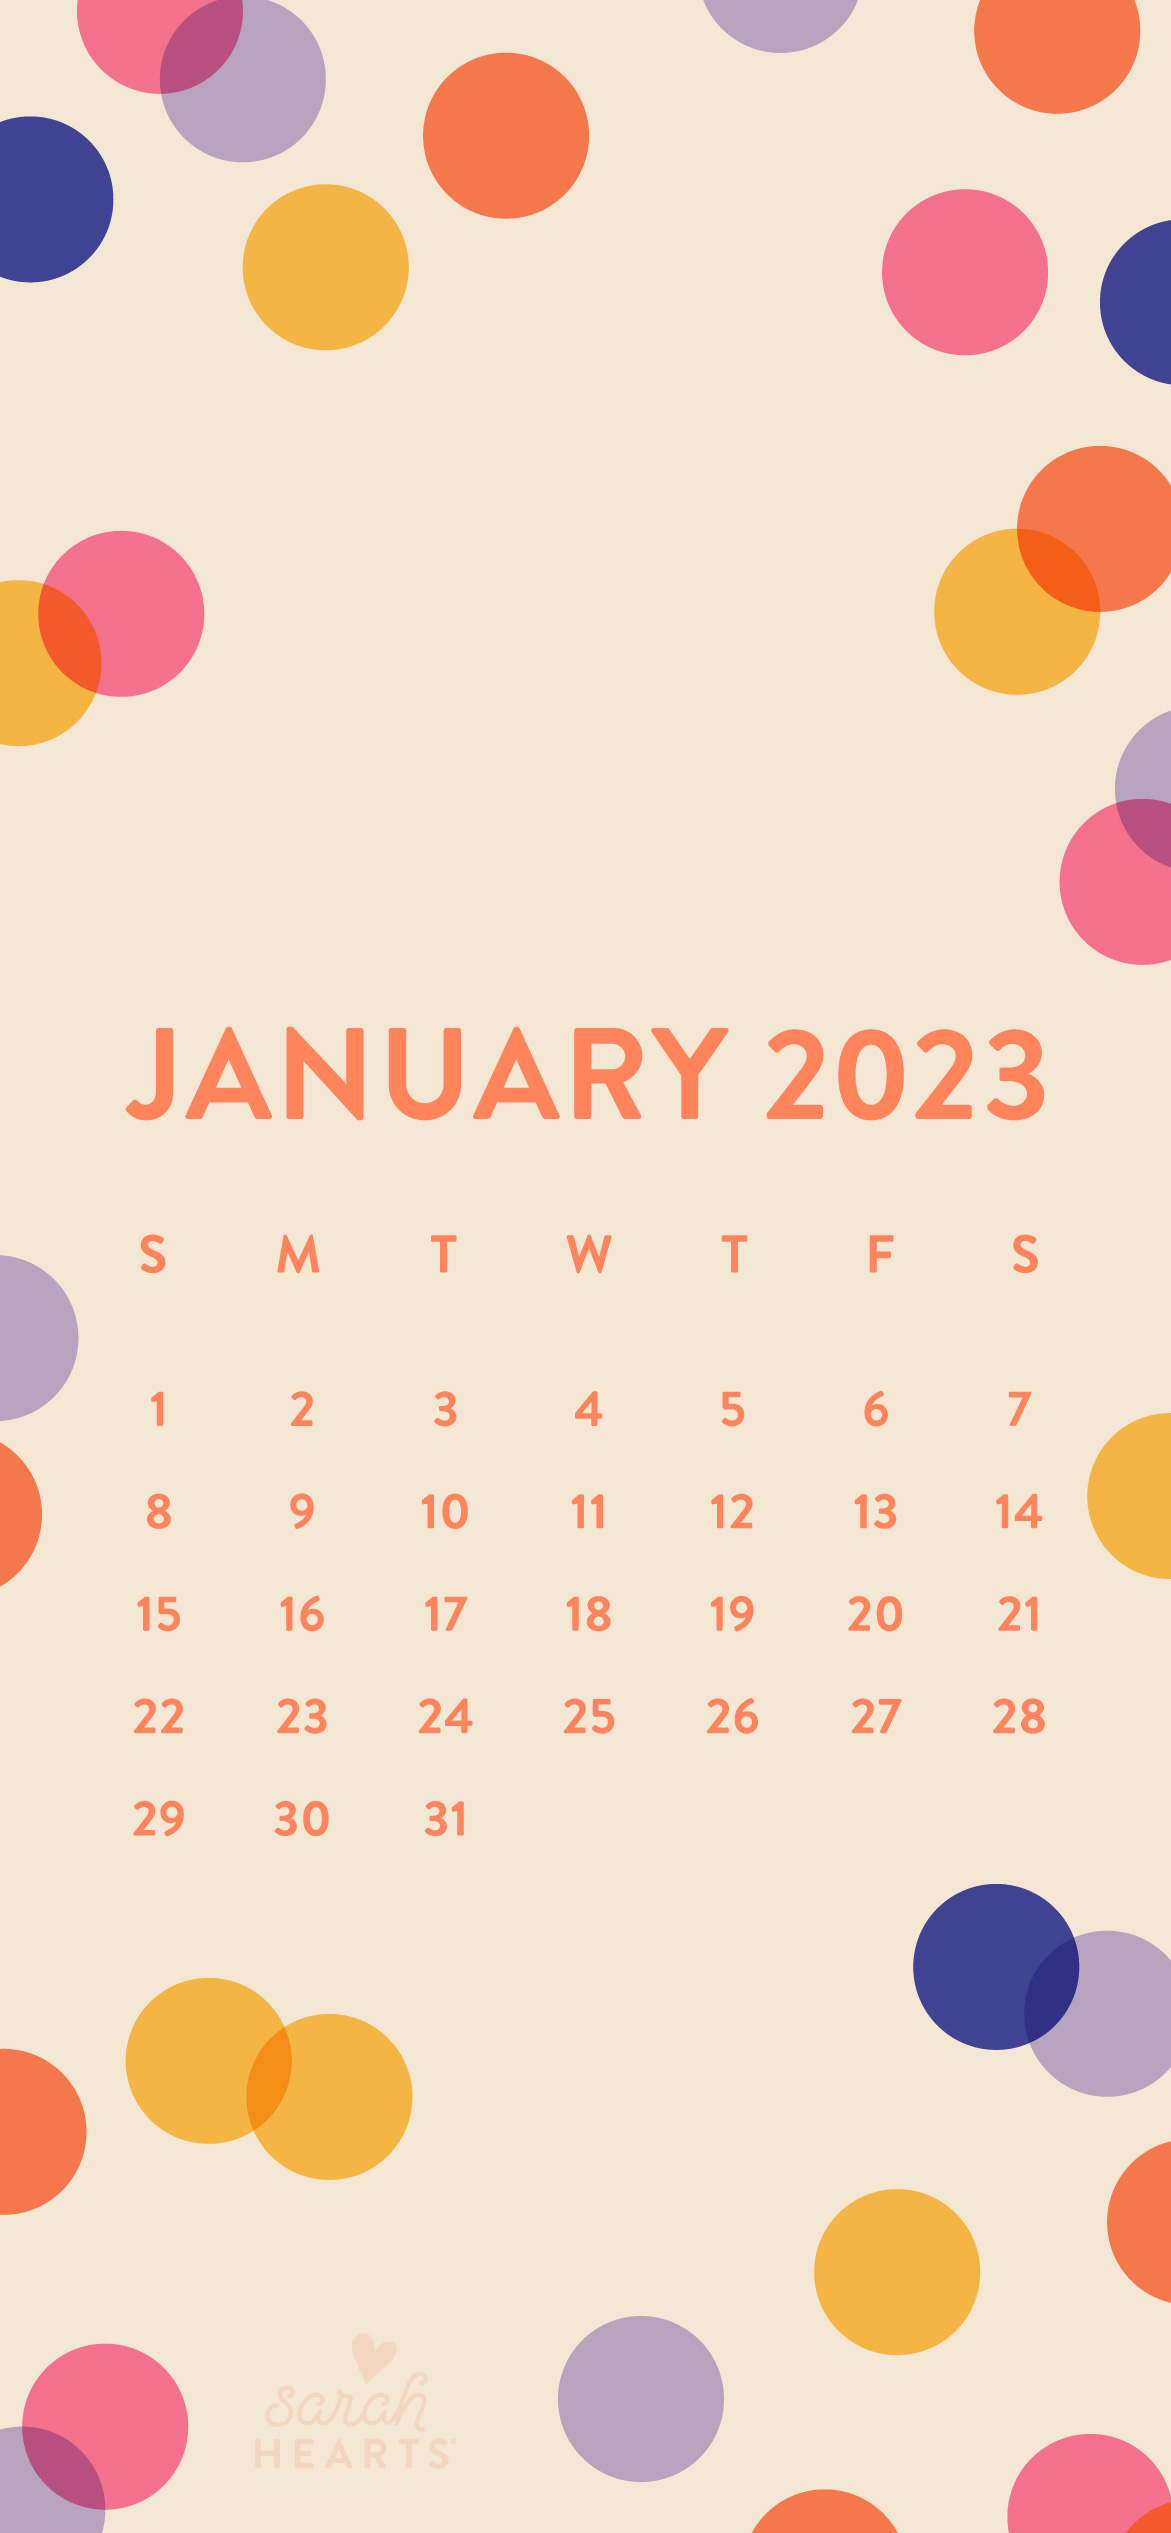 Winter Evergreen iPhone Wallpaper  January 2023 Desktop Organizer